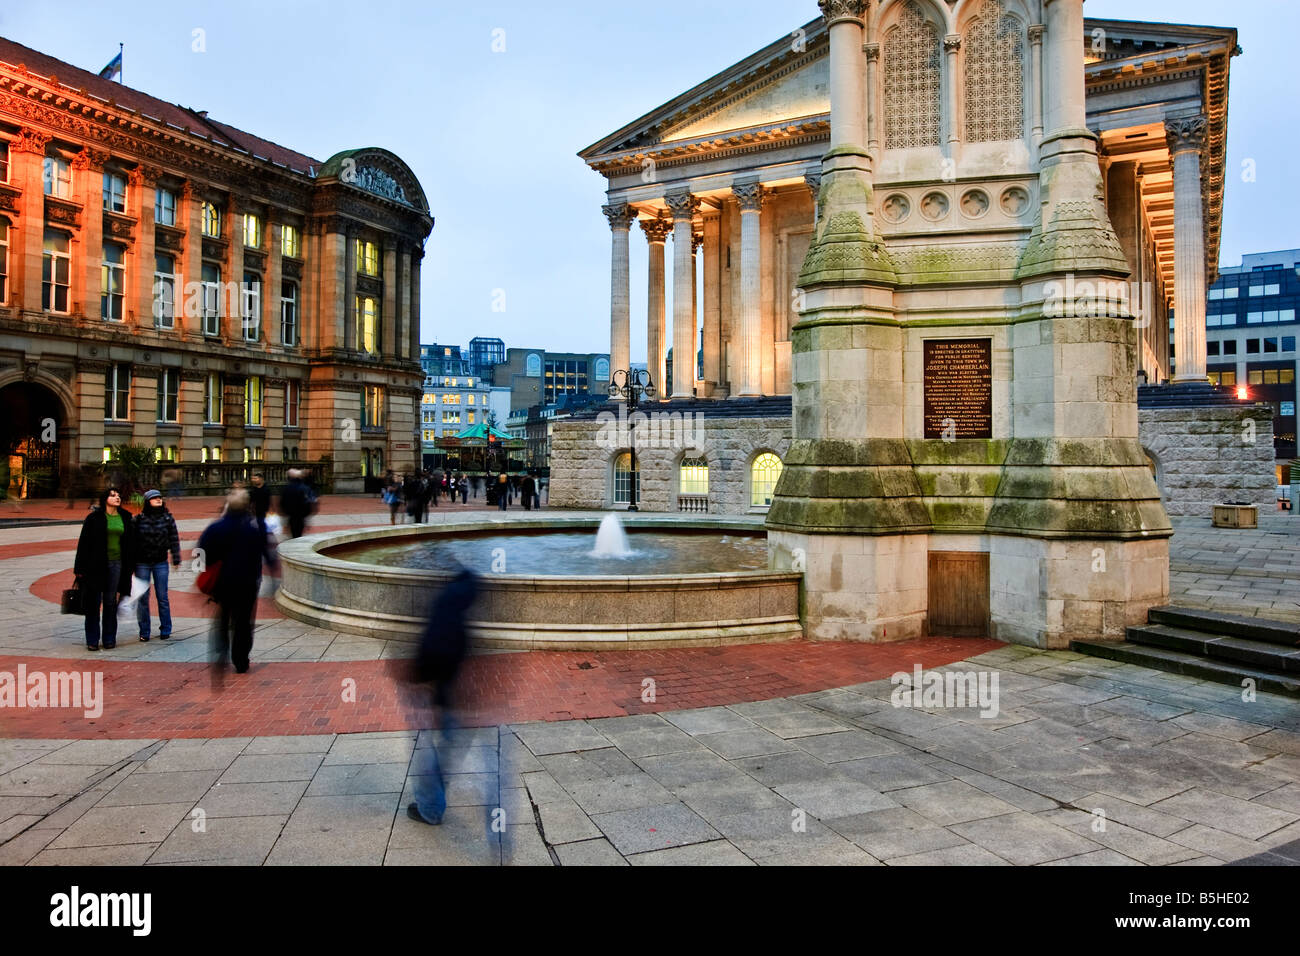 Evening scene in Chamberlain square, Birmingham, showing workers rushing home Stock Photo